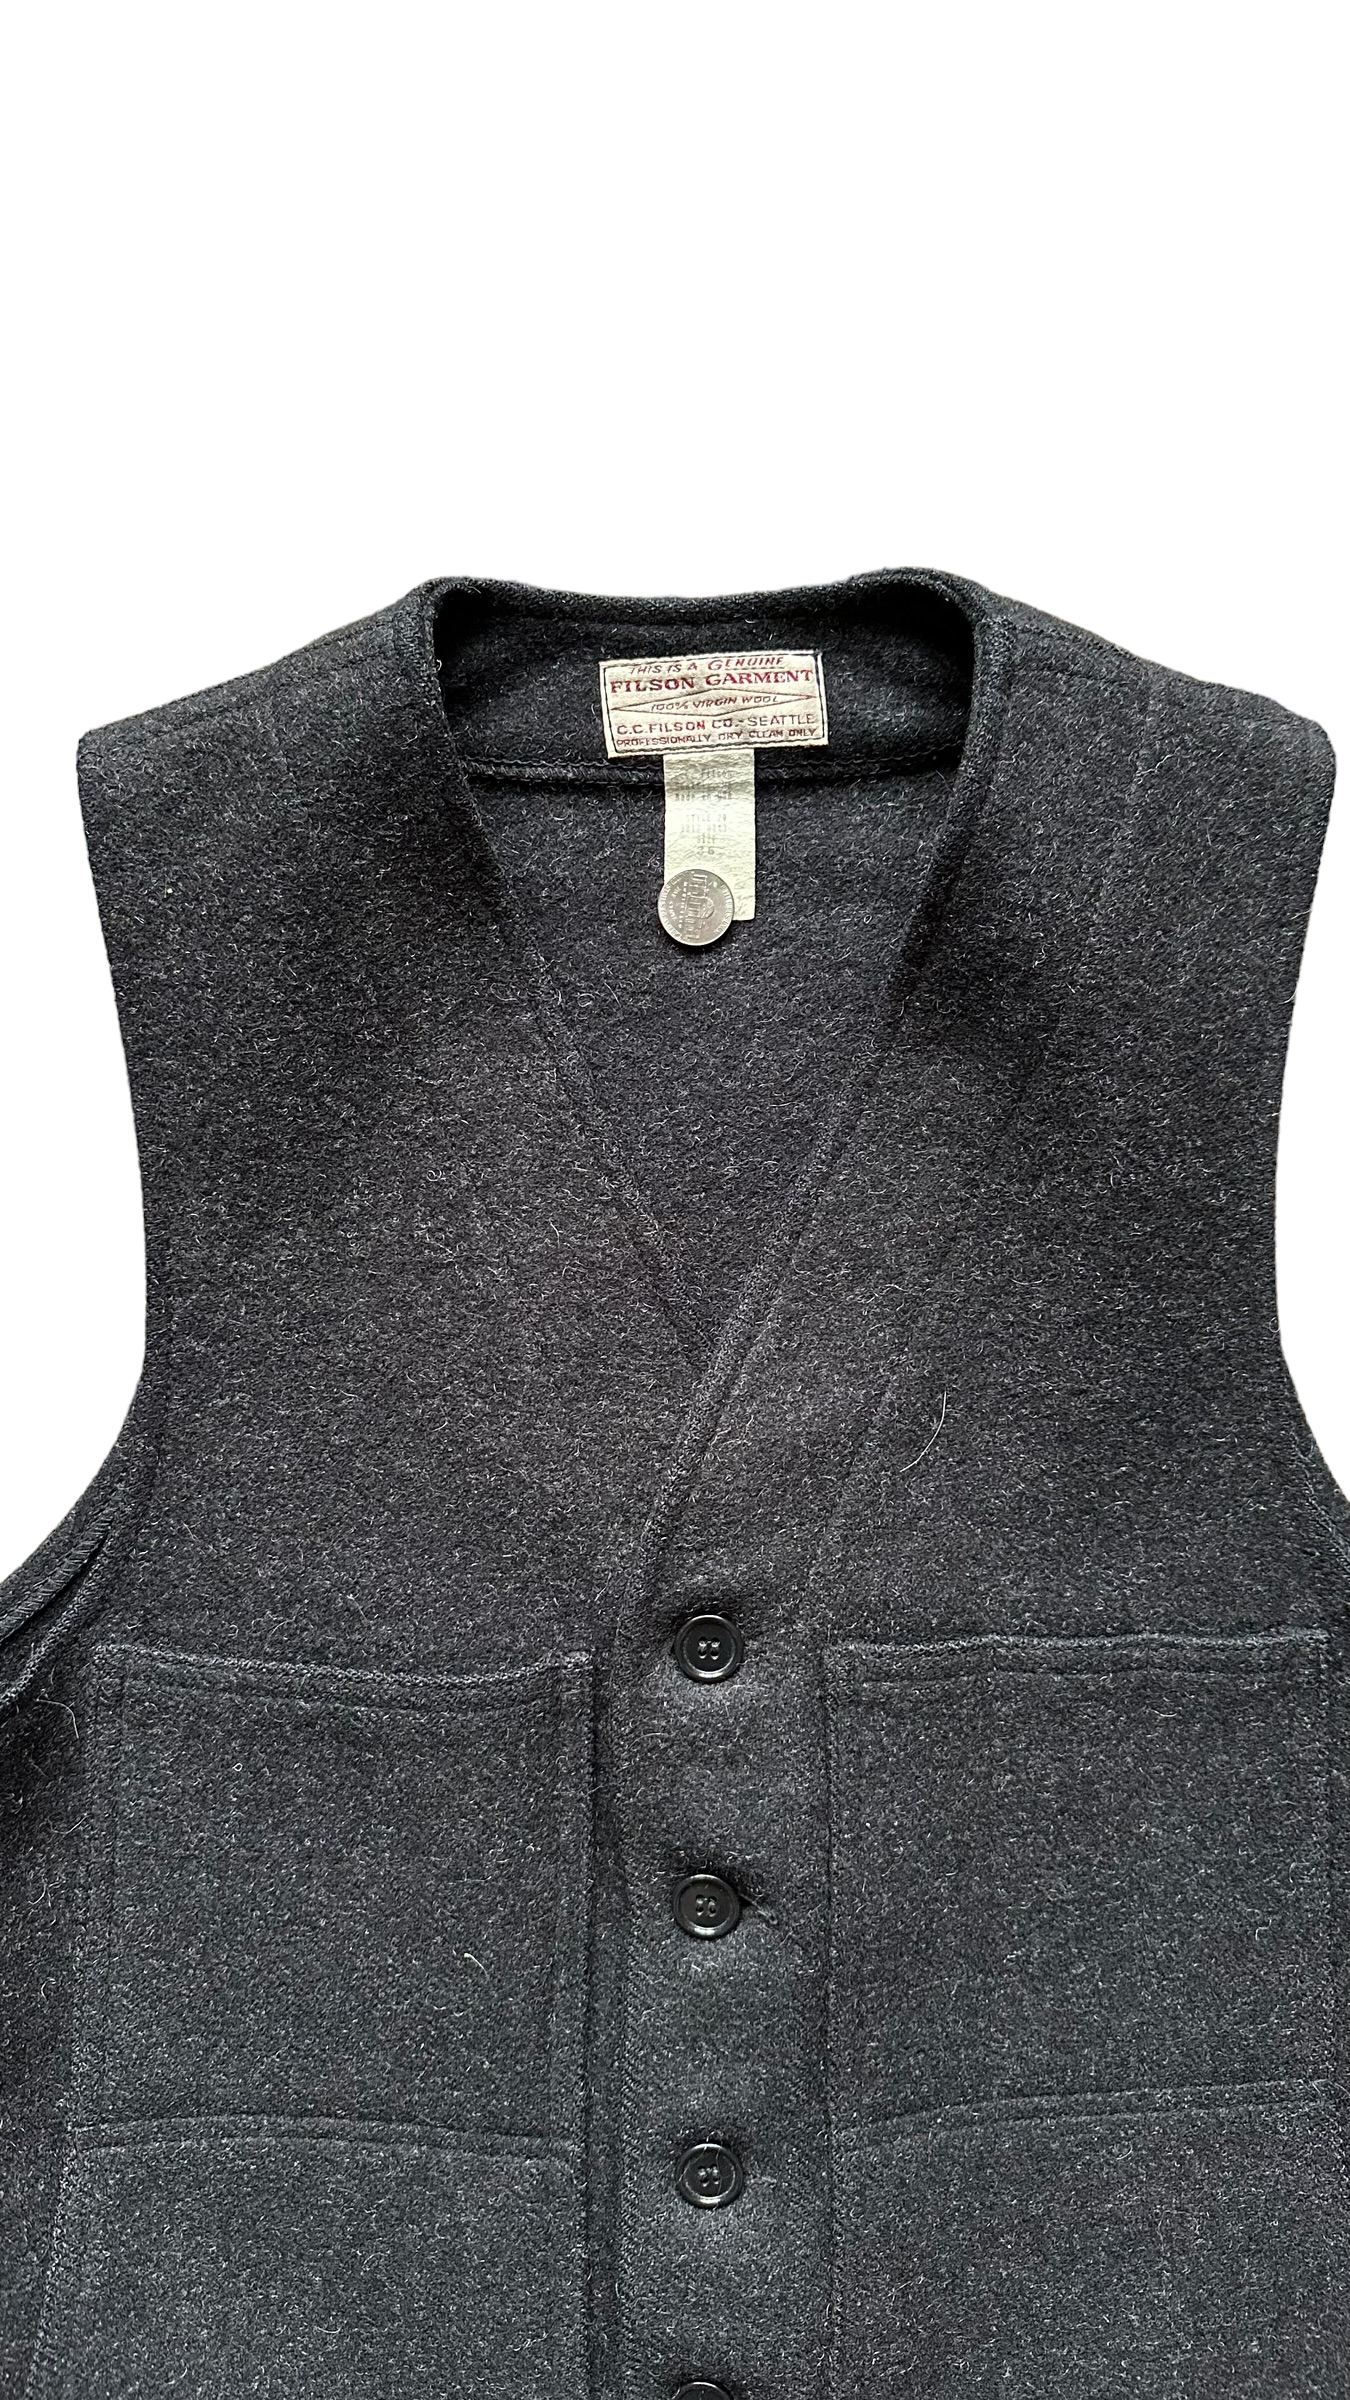 Upper Front View of Vintage Filson Mackinaw Vest SZ 36 |  Charcoal Grey Wool Vest | Vintage Seattle Workwear